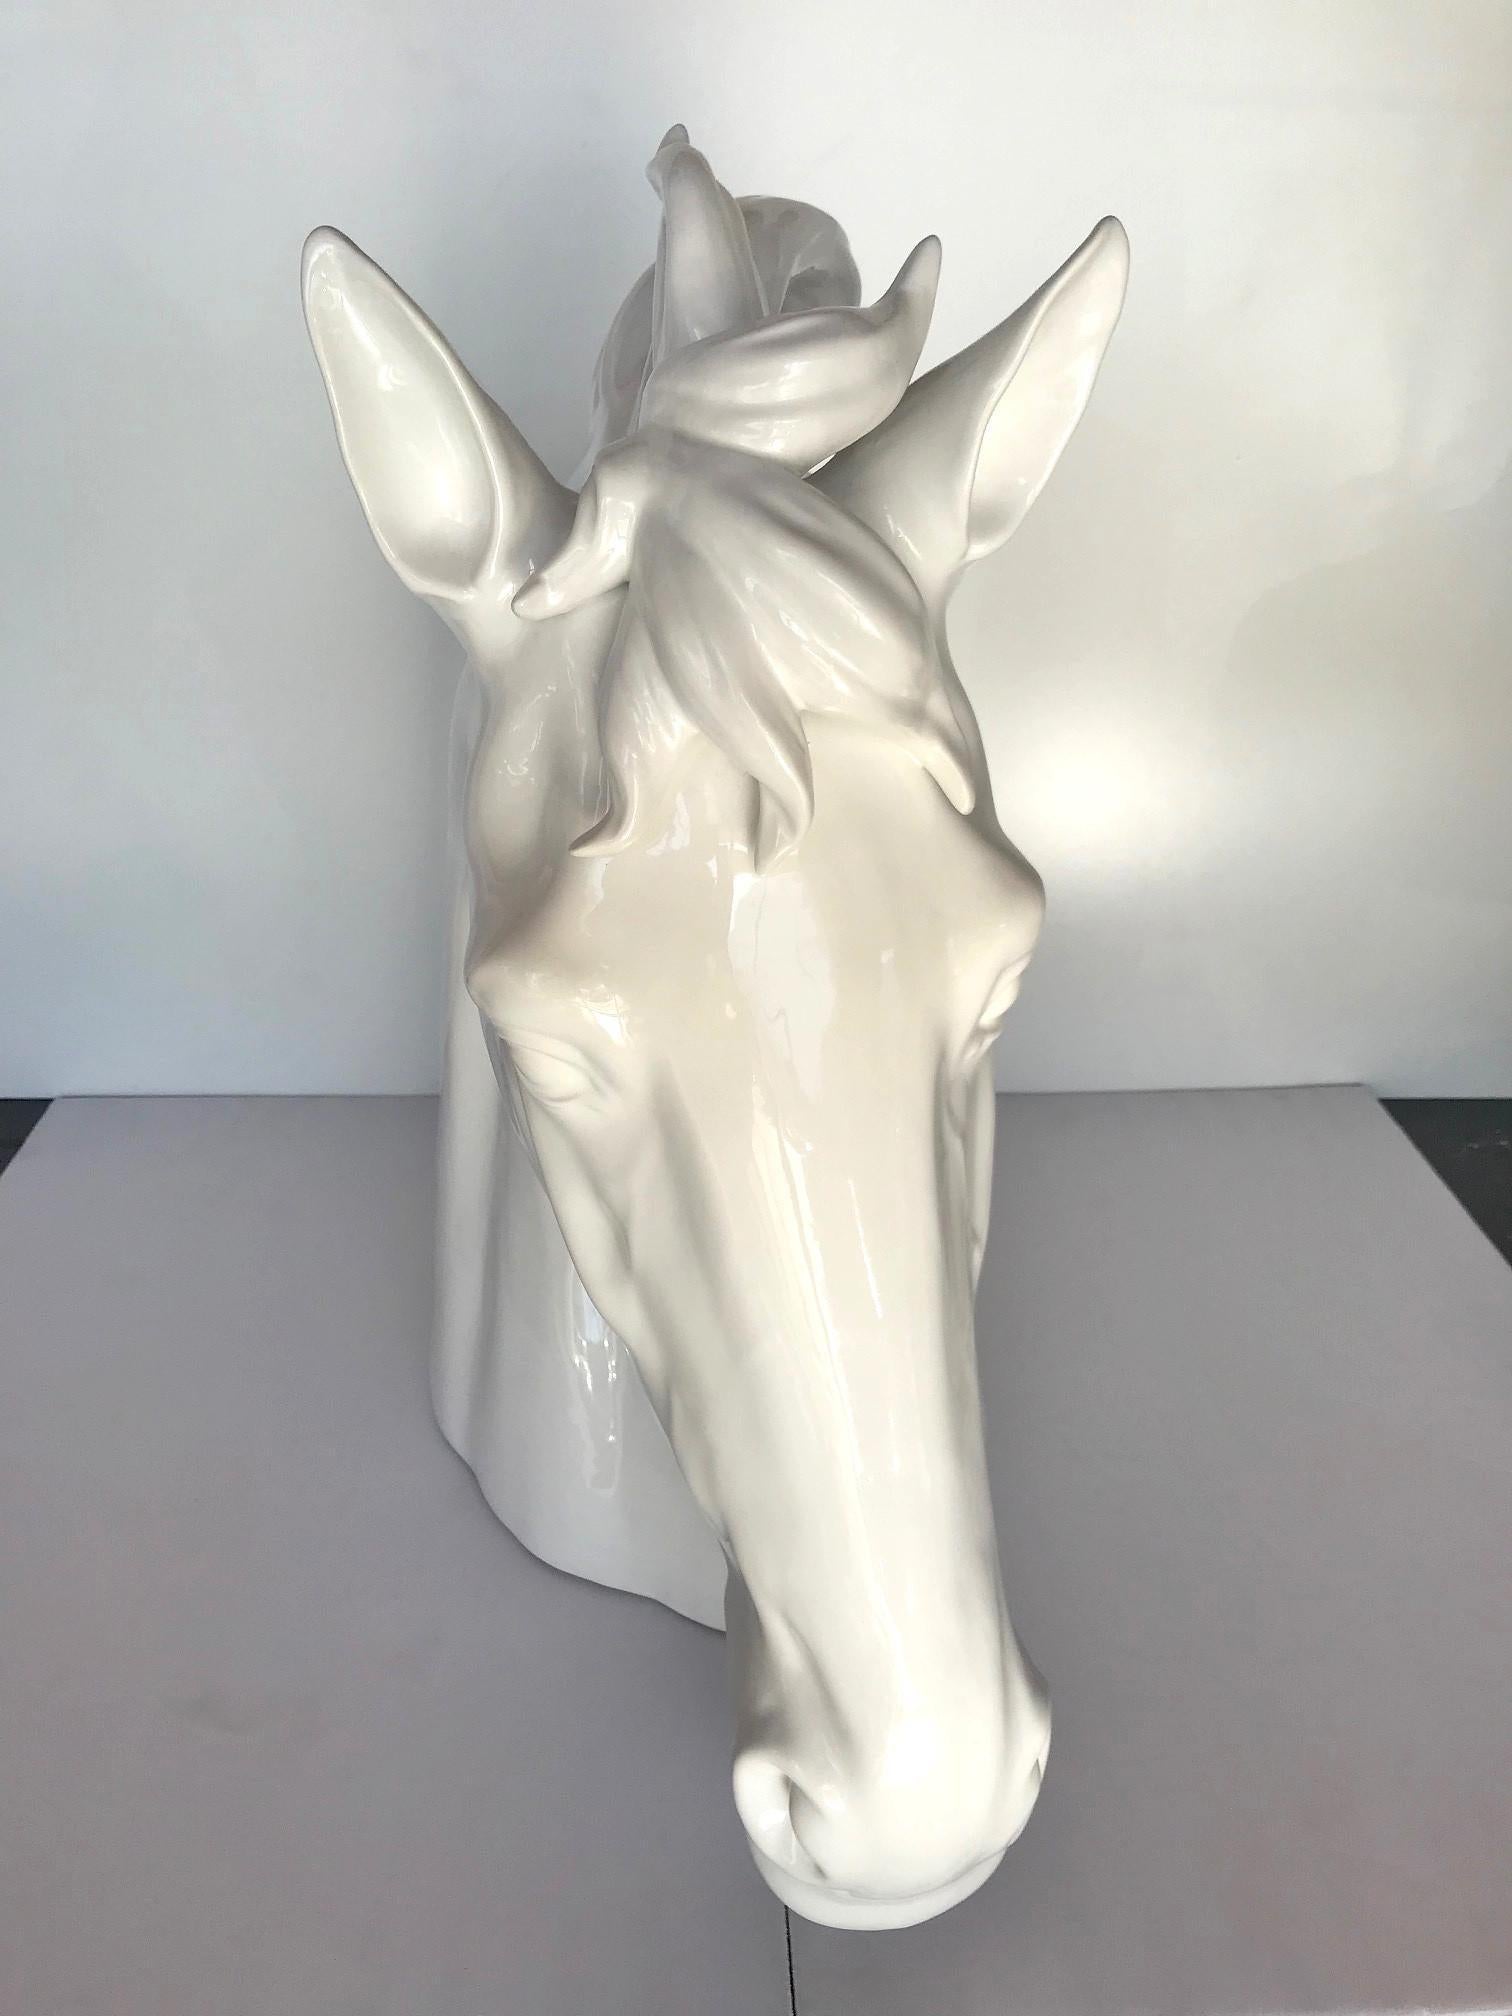 Italian white ceramic decorative horse head sculpture / Made in Italy.